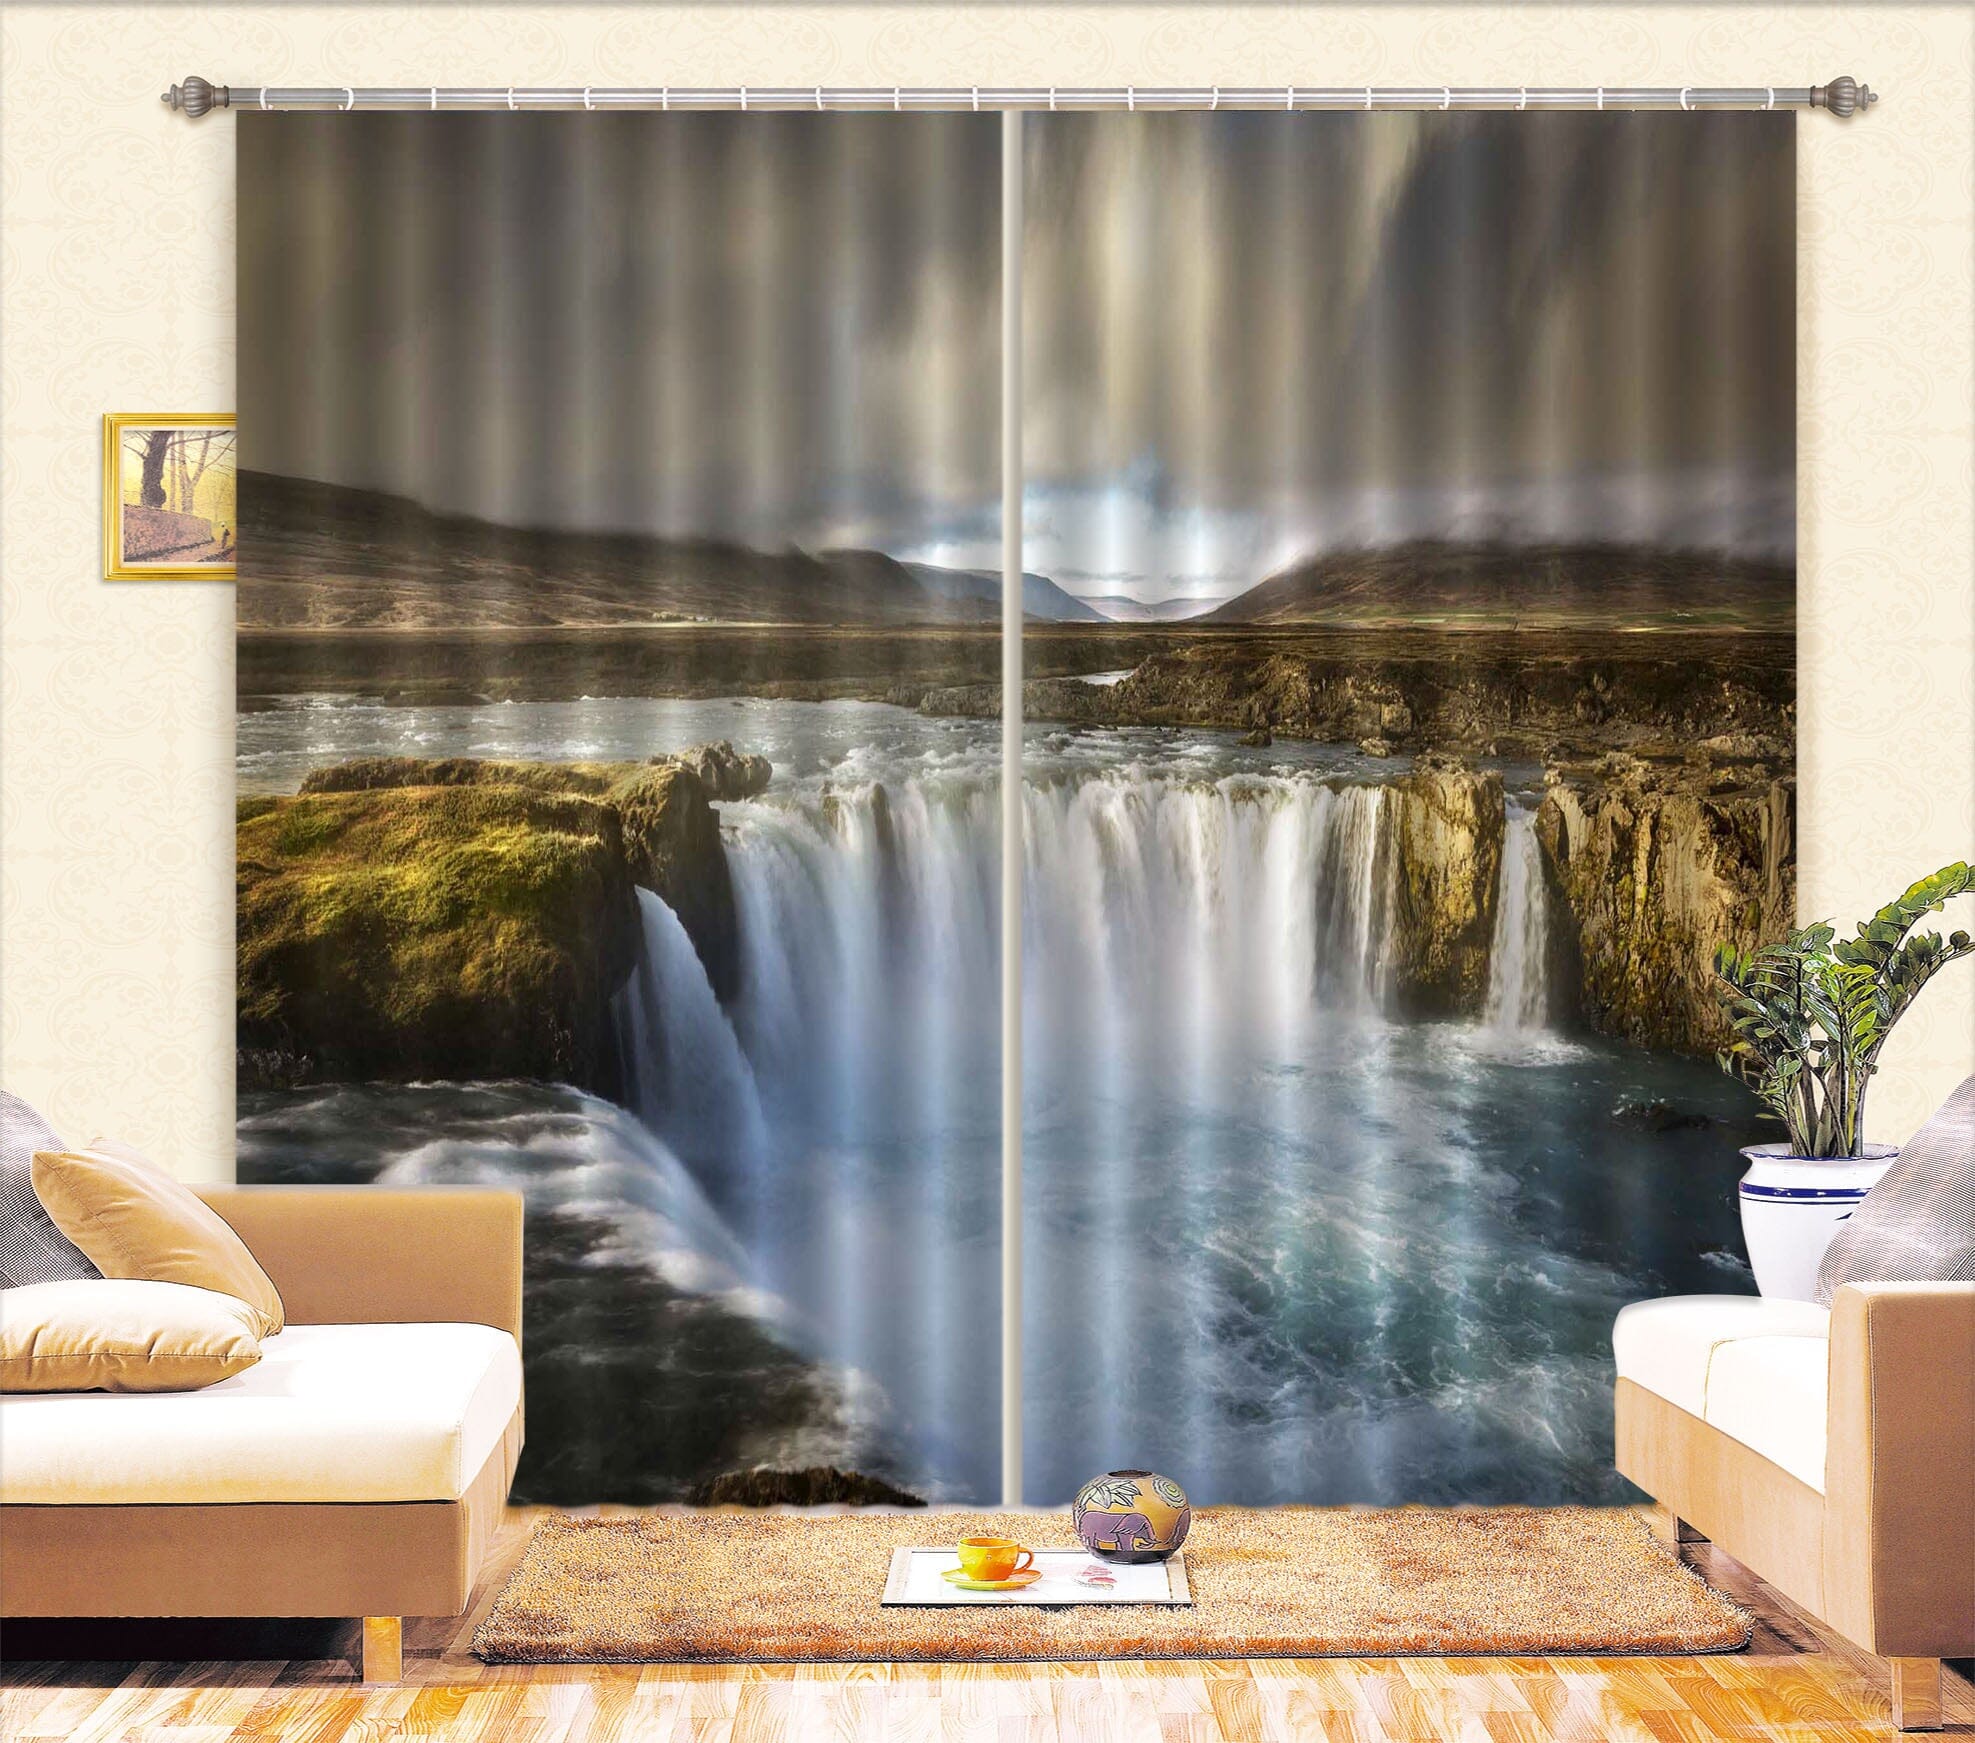 3D Forest Waterfall 135 Marco Carmassi Curtain Curtains Drapes Curtains AJ Creativity Home 